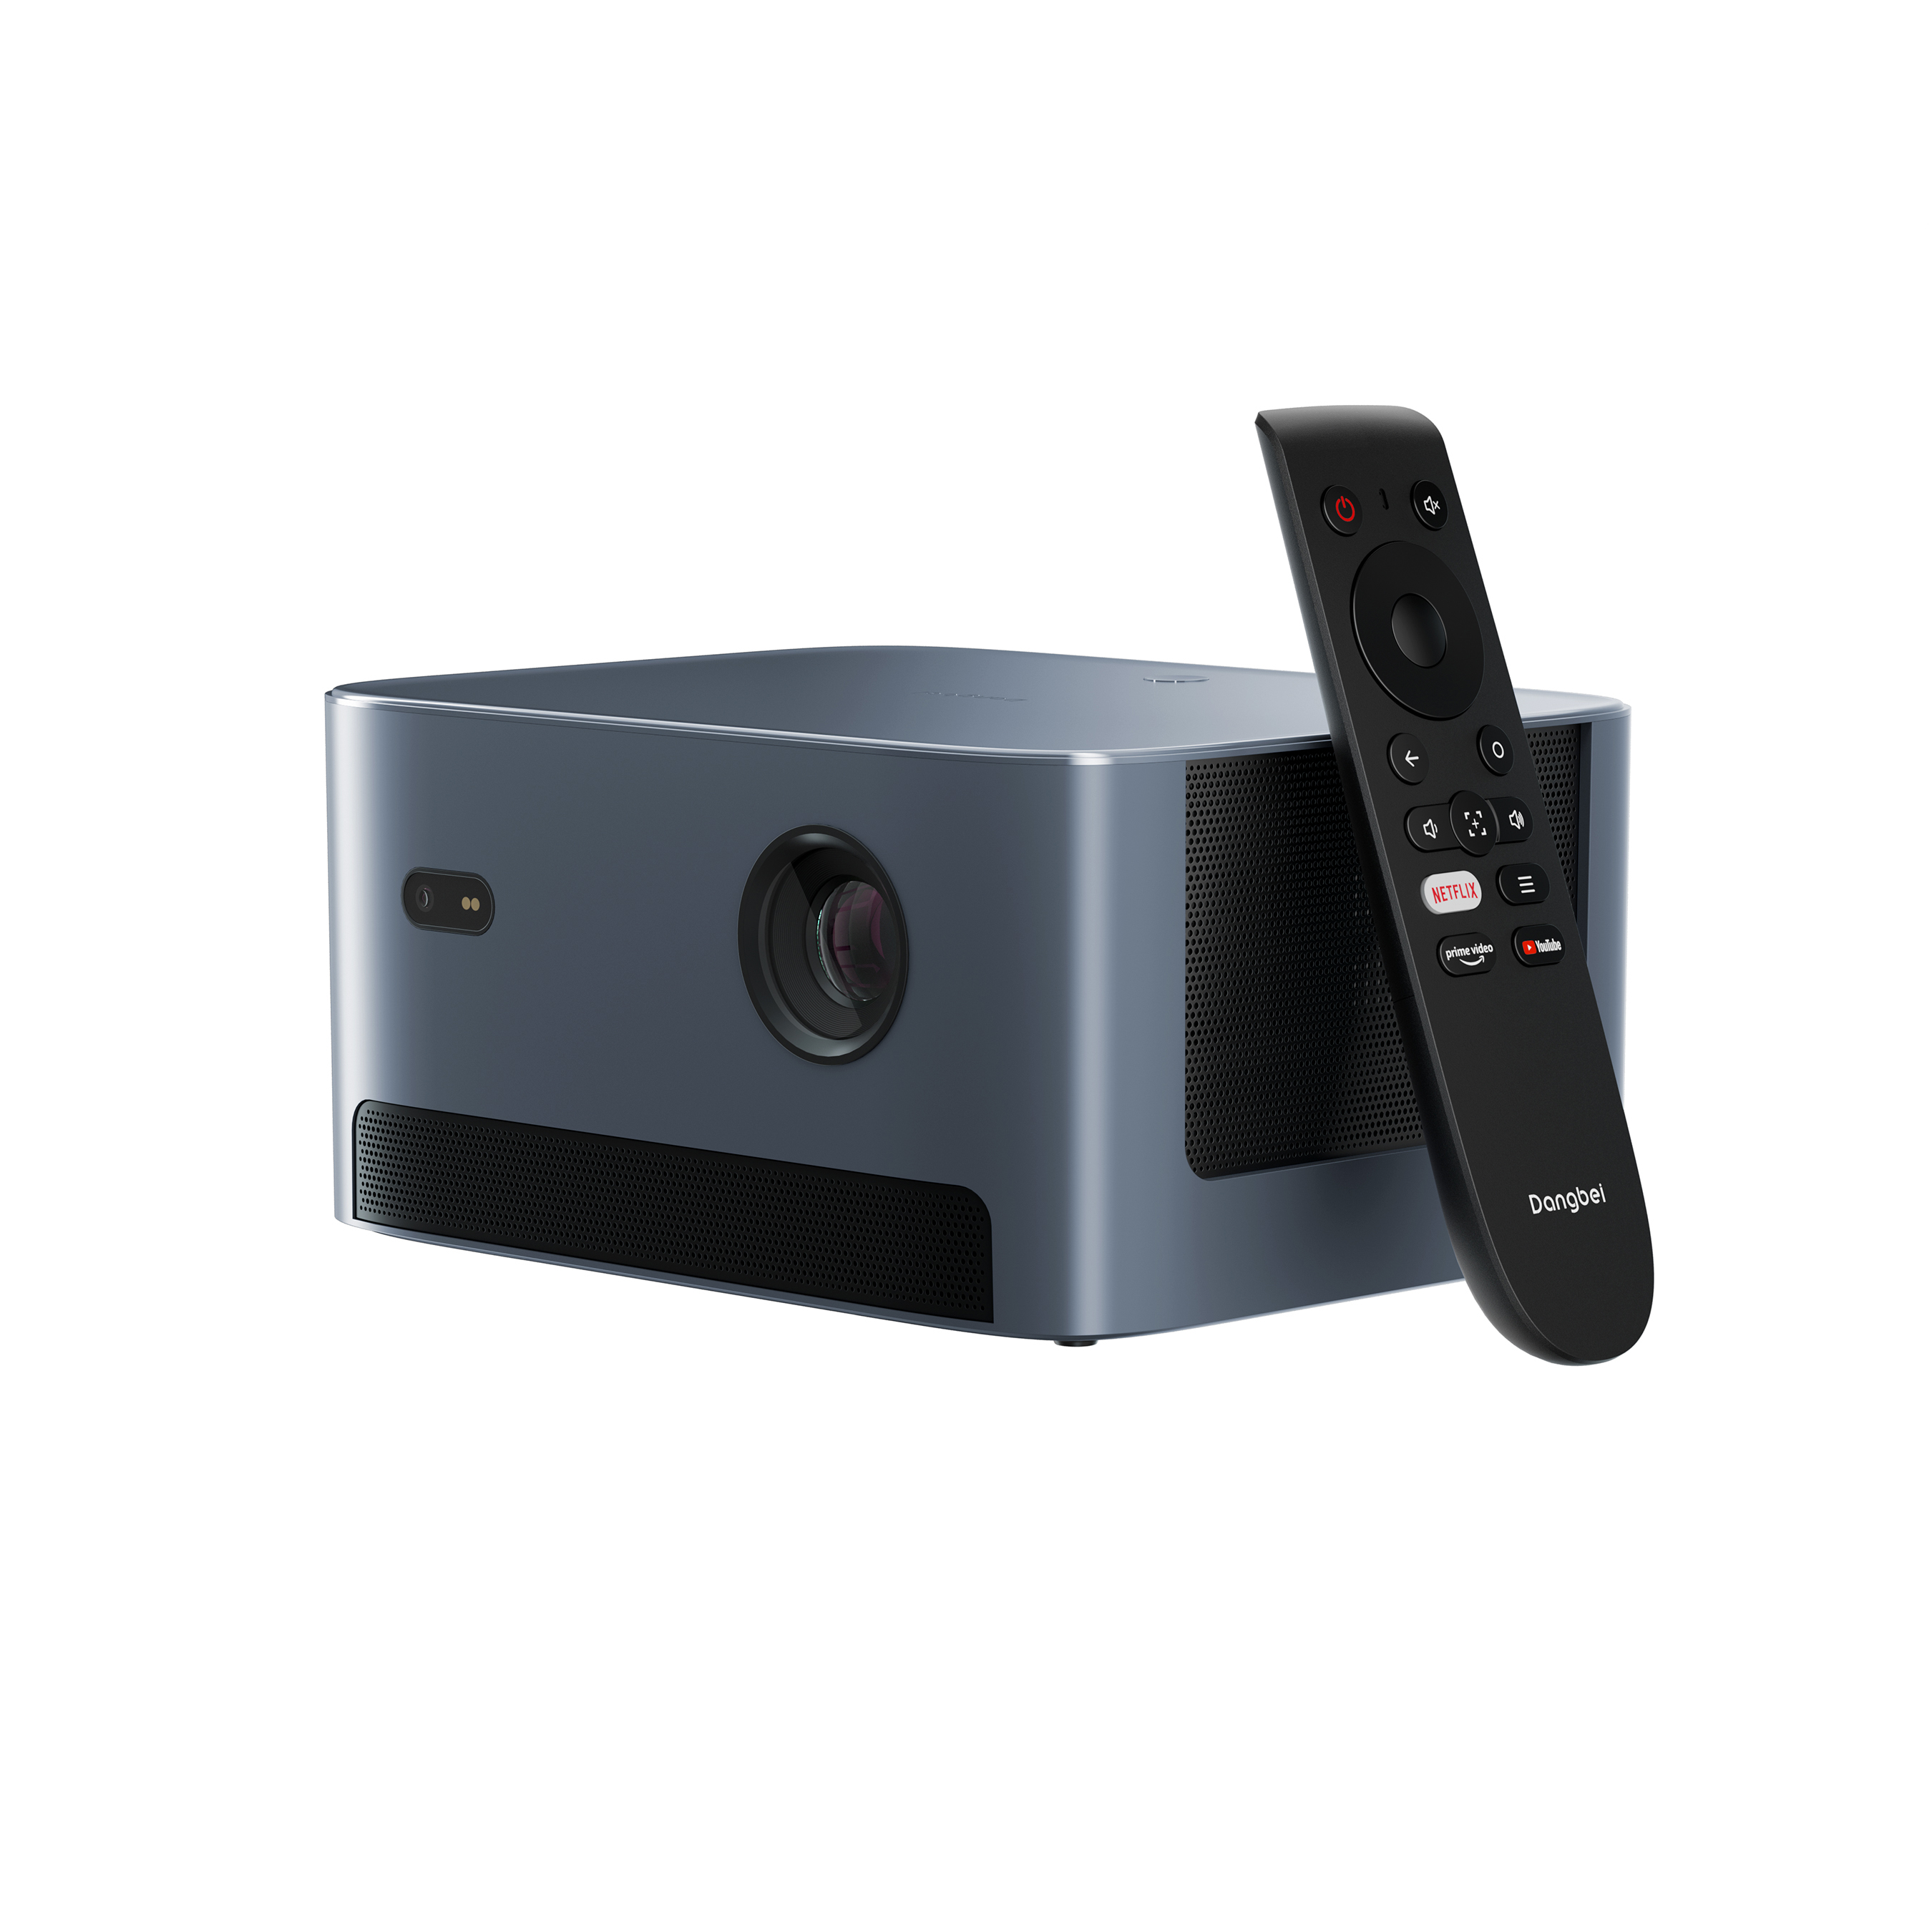 DANGBEI Neo 1080P Blau ANSI-Lumen) Beamer(Full-HD, Netflix 540